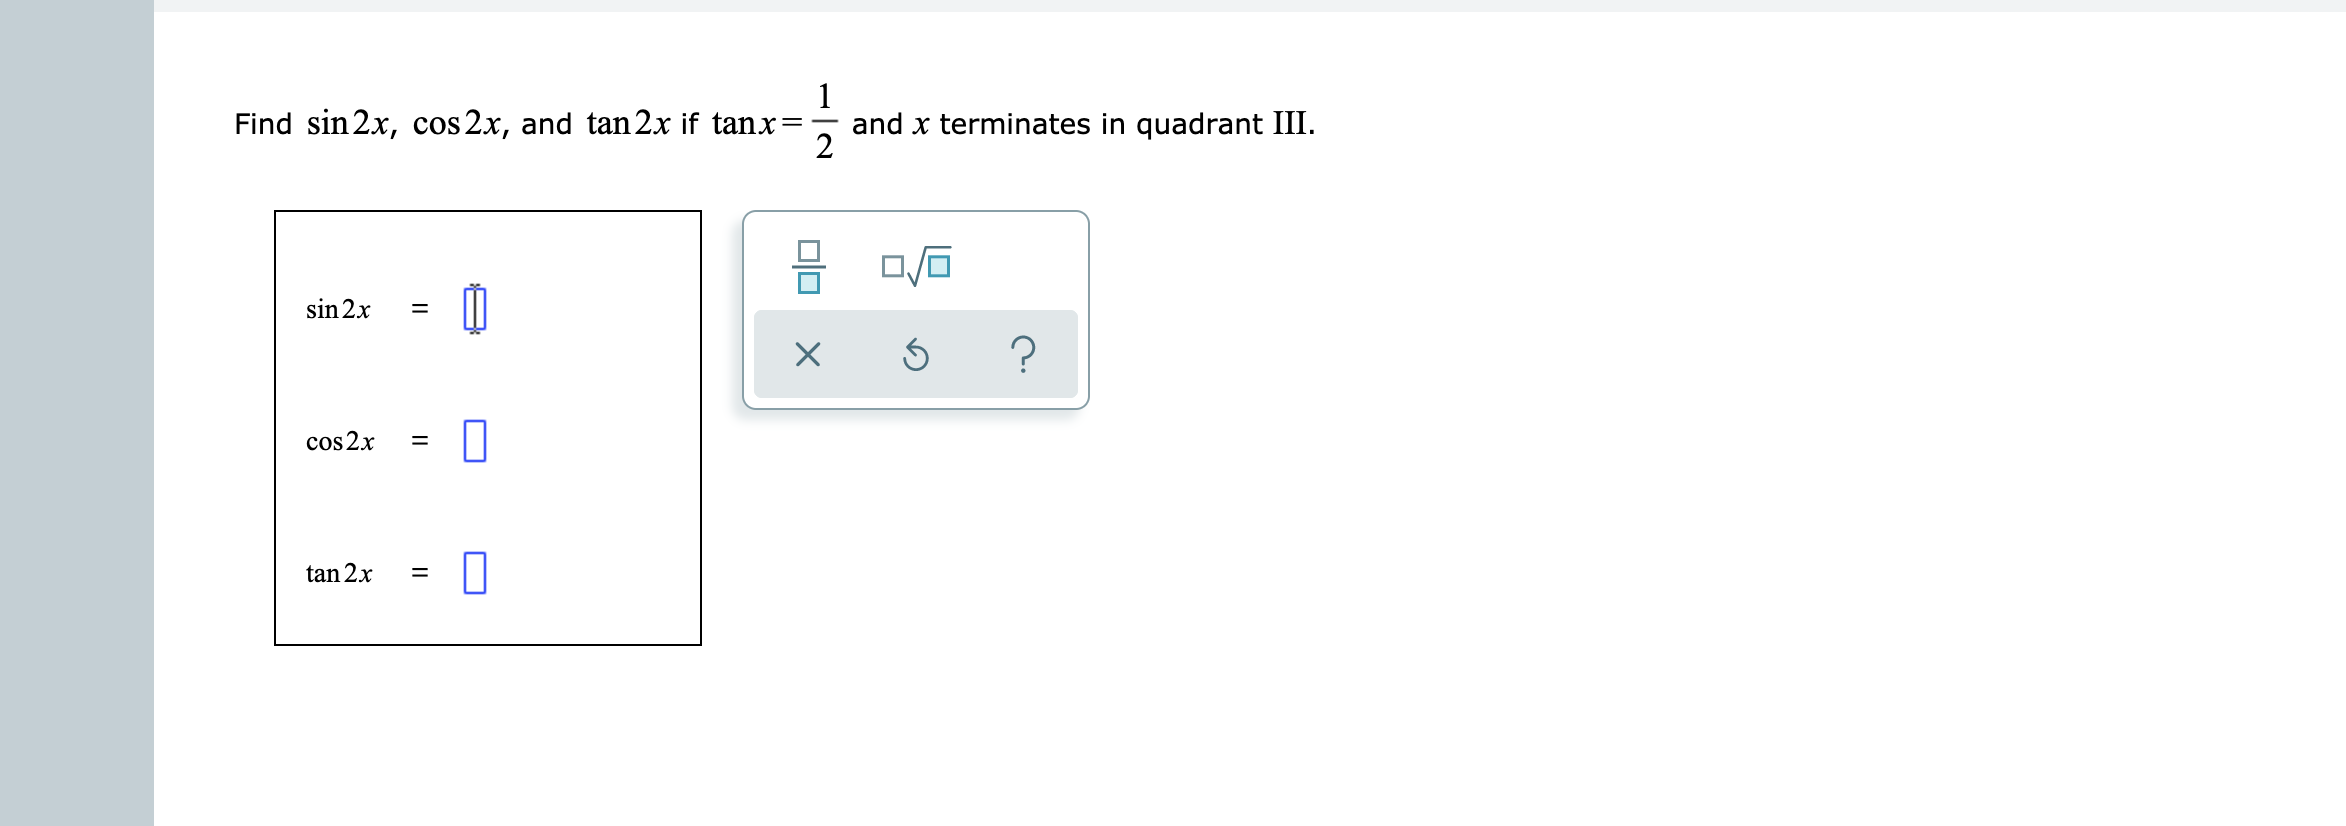 1
Find sin 2x, cos 2x, and tan 2x if tanx=-
and x terminates in quadrant III
2
sin 2x
?
X
cos2x
tan 2x
II
